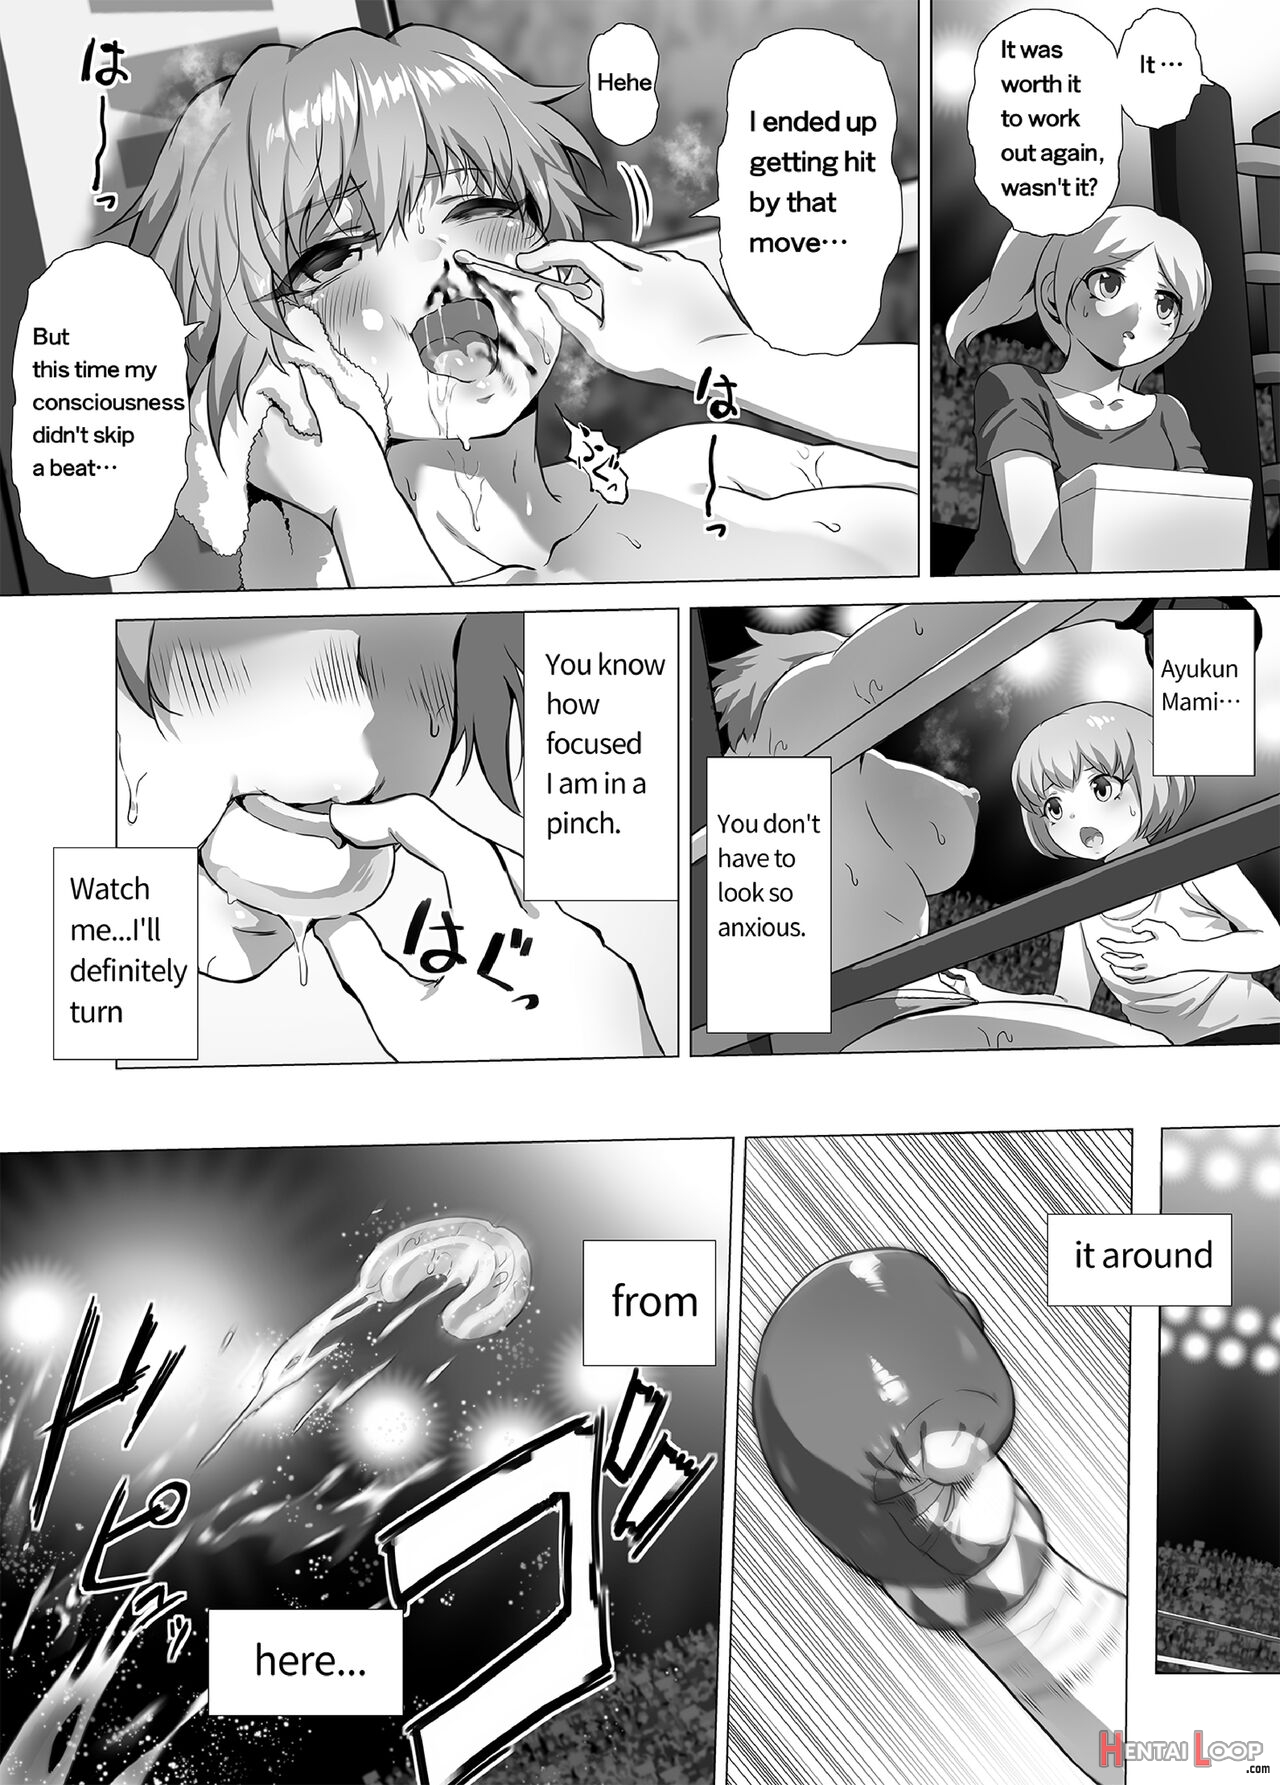 Mahiro Standup! Manga Ver. ~an New Foe Appears! Meet The Lovely Yuzuki~ page 32